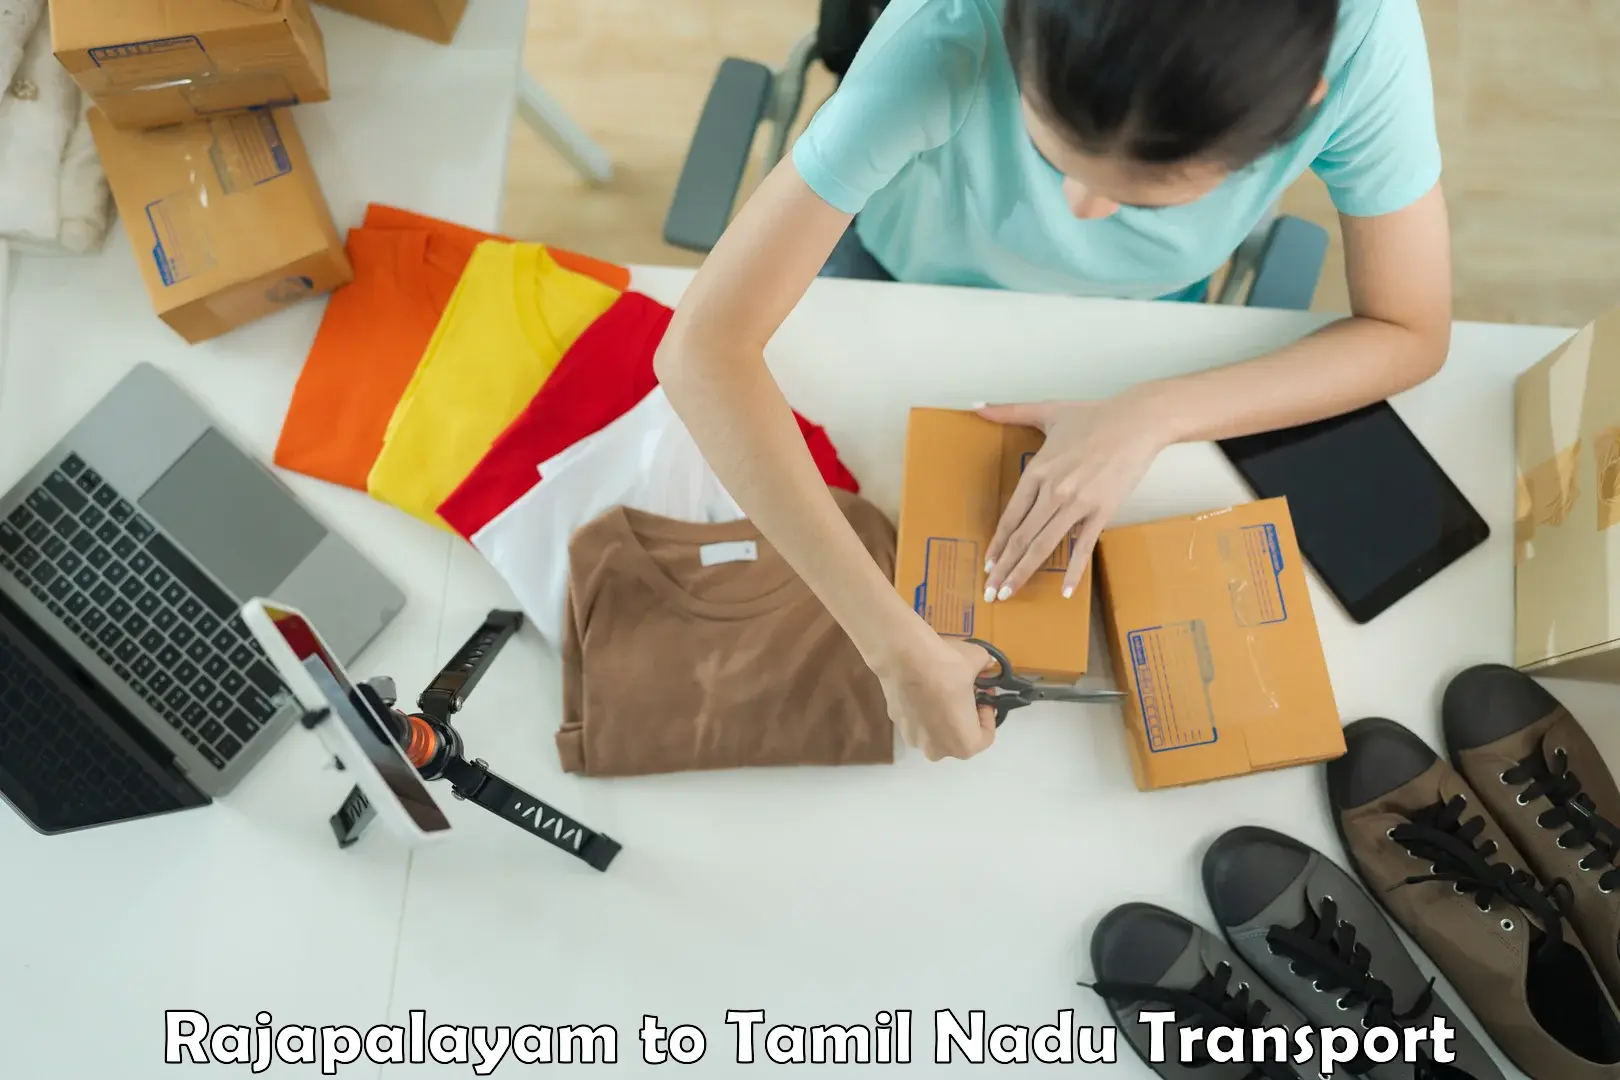 Transport in sharing Rajapalayam to Tamil Nadu